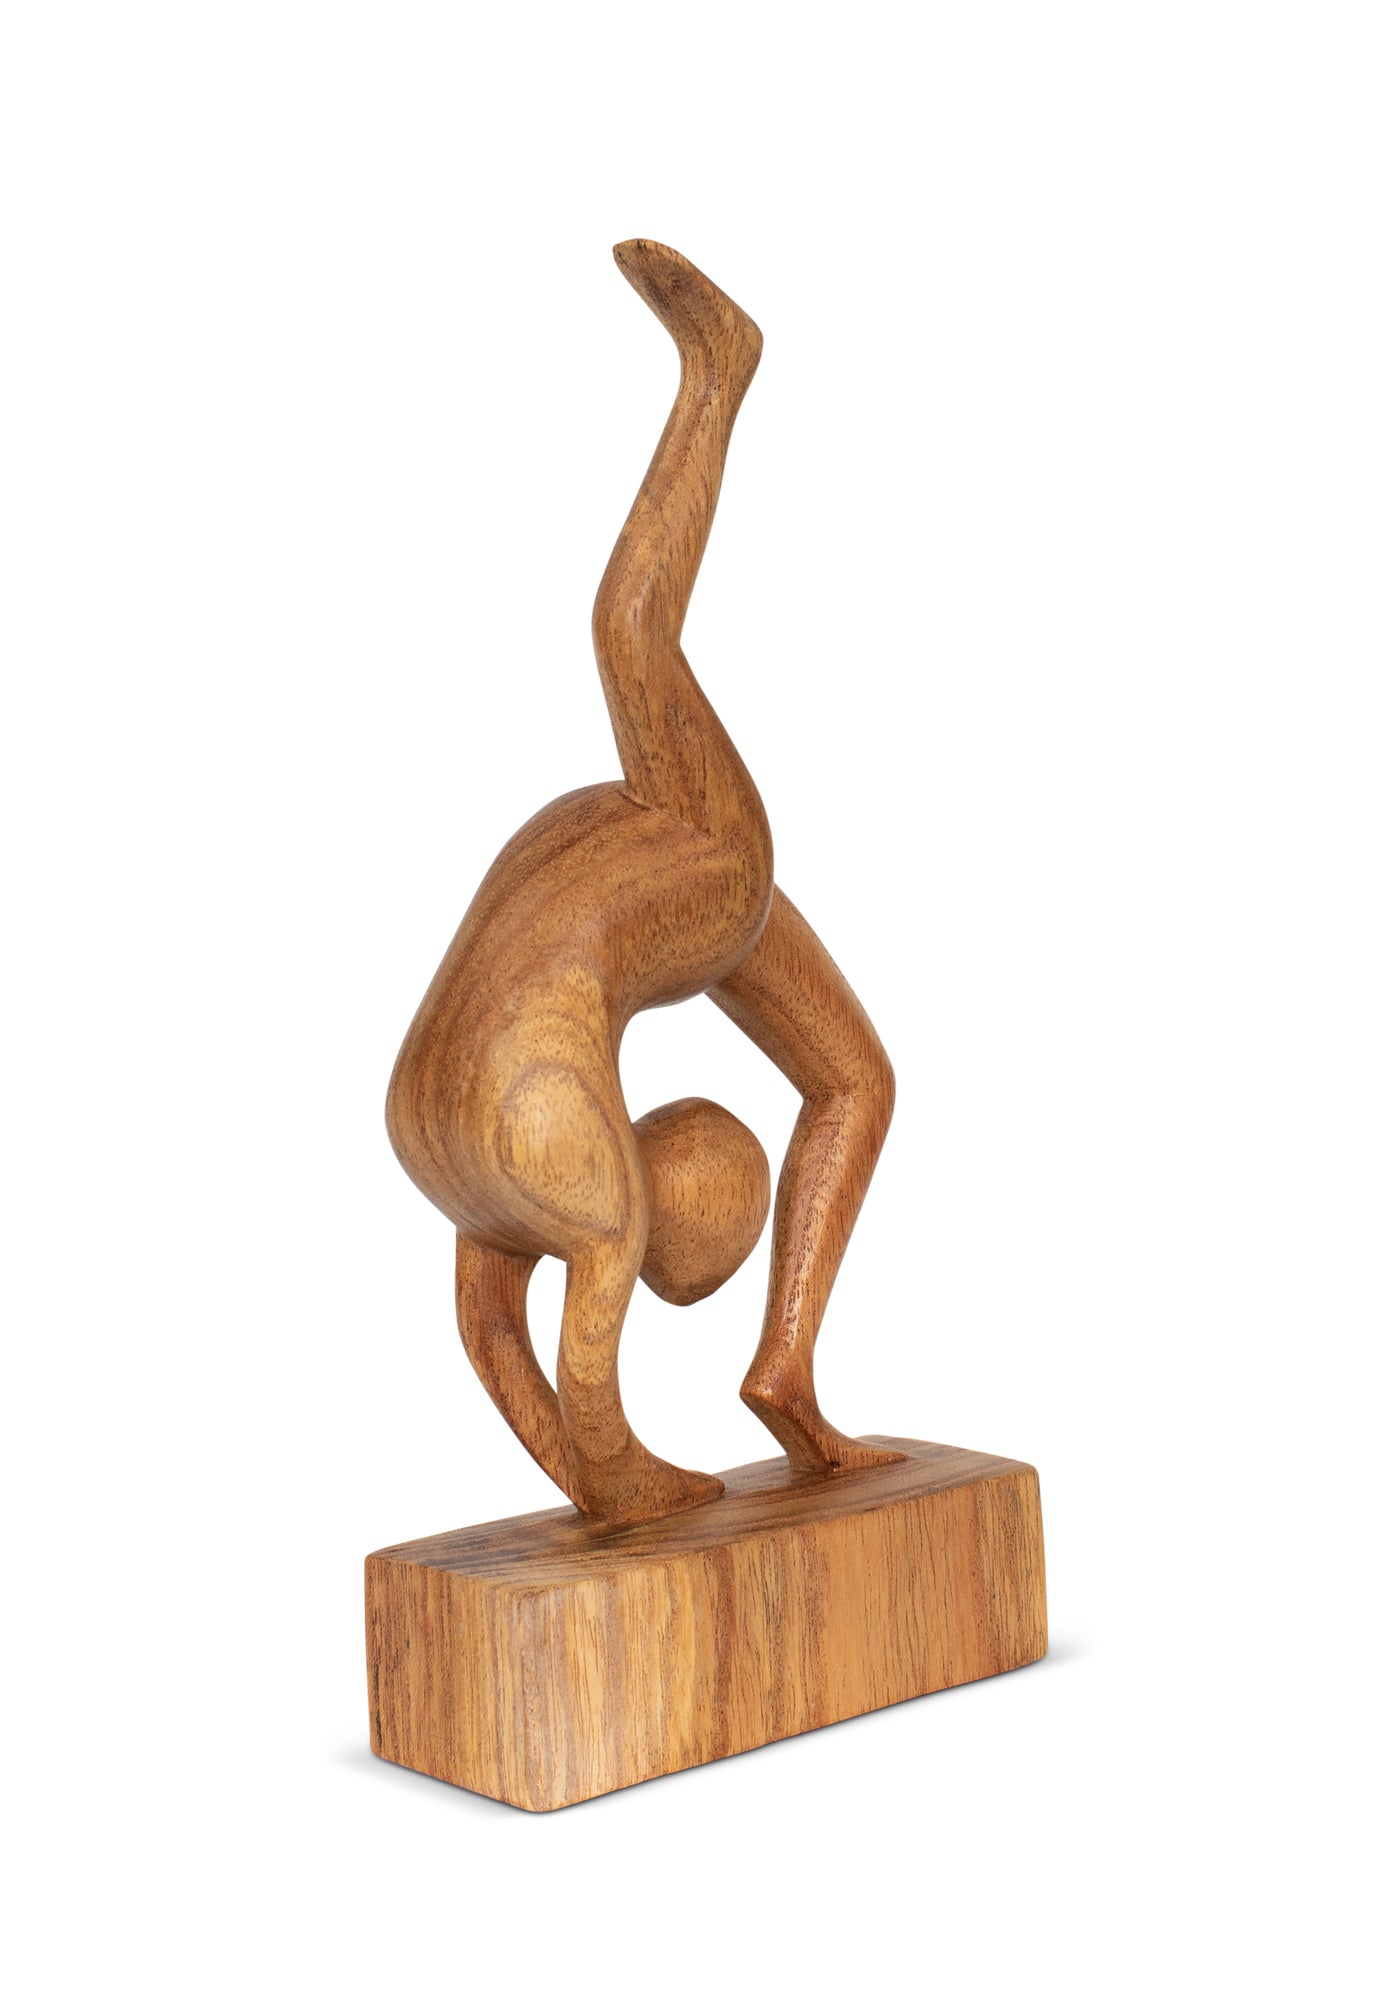 10" Wooden Handmade Mini Yoga Figurines, Yoga Pose Statue, Yoga Room Studio Decor, Mindful Home Decor Yogi Gift, Decorative Shelf Decor Objects - One-Legged Wheel Pose - Heel Up